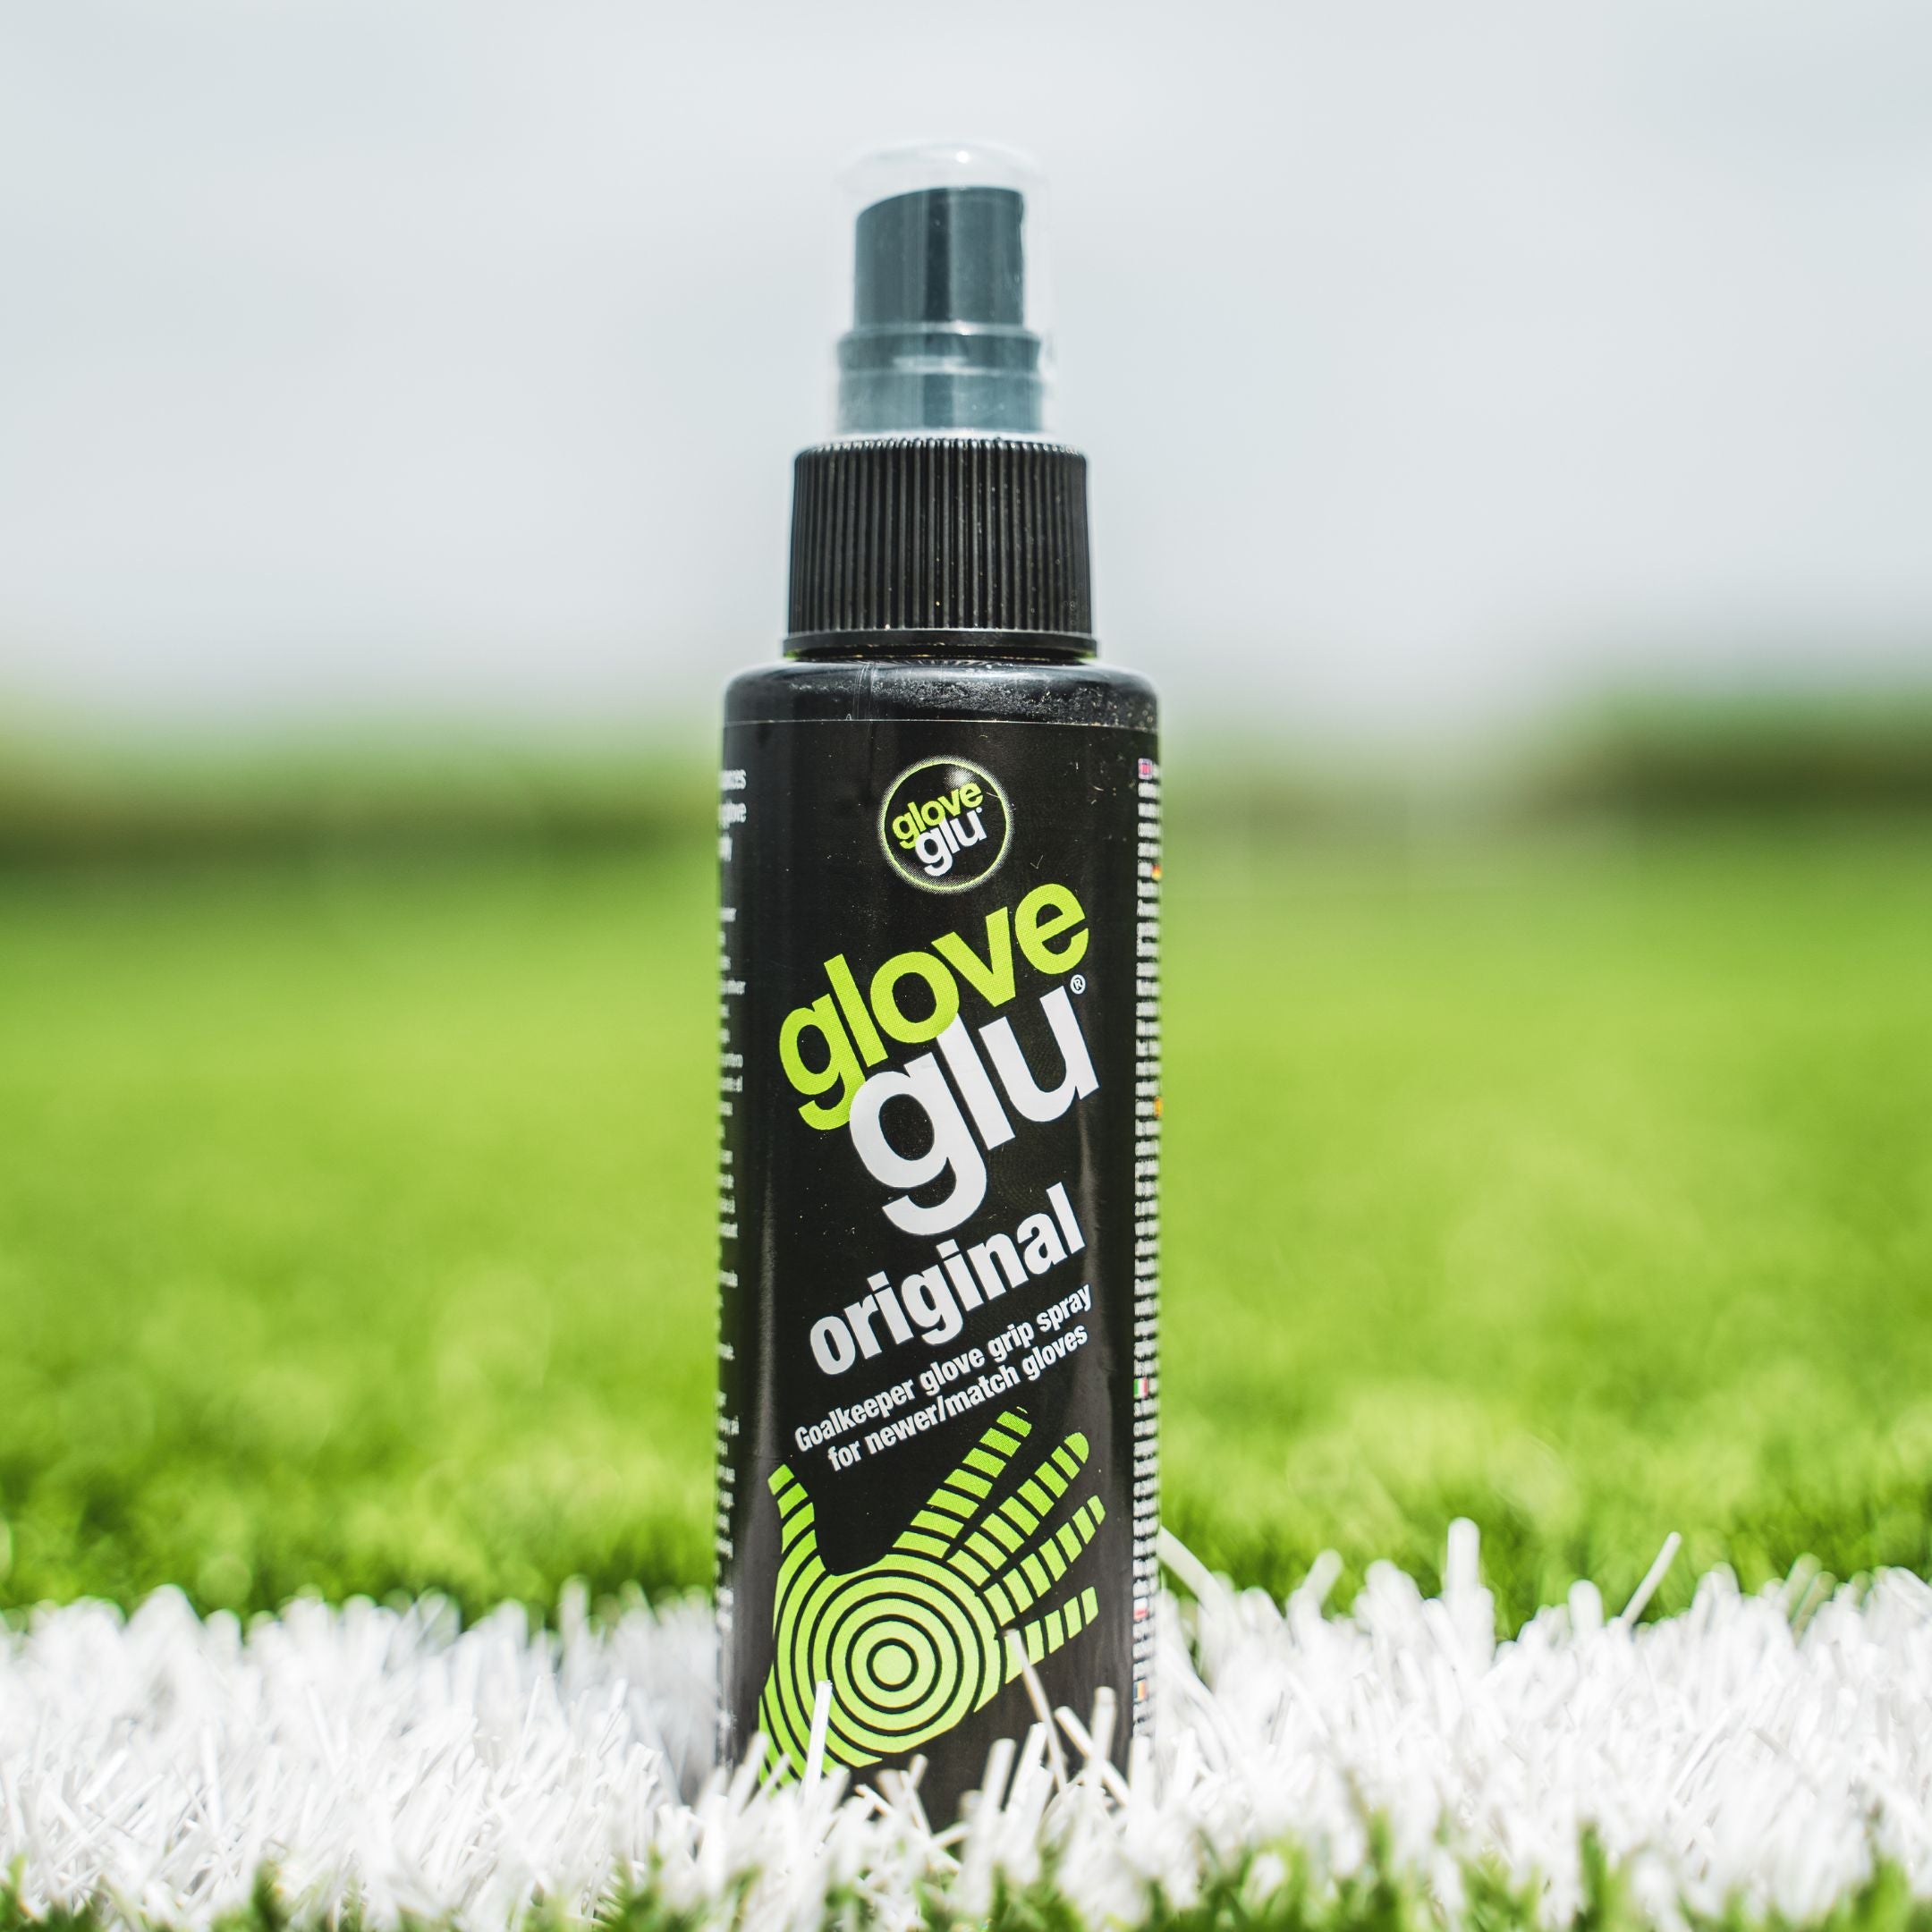 Glove Glue Goalkeeping Glove Glue Spray 30ml